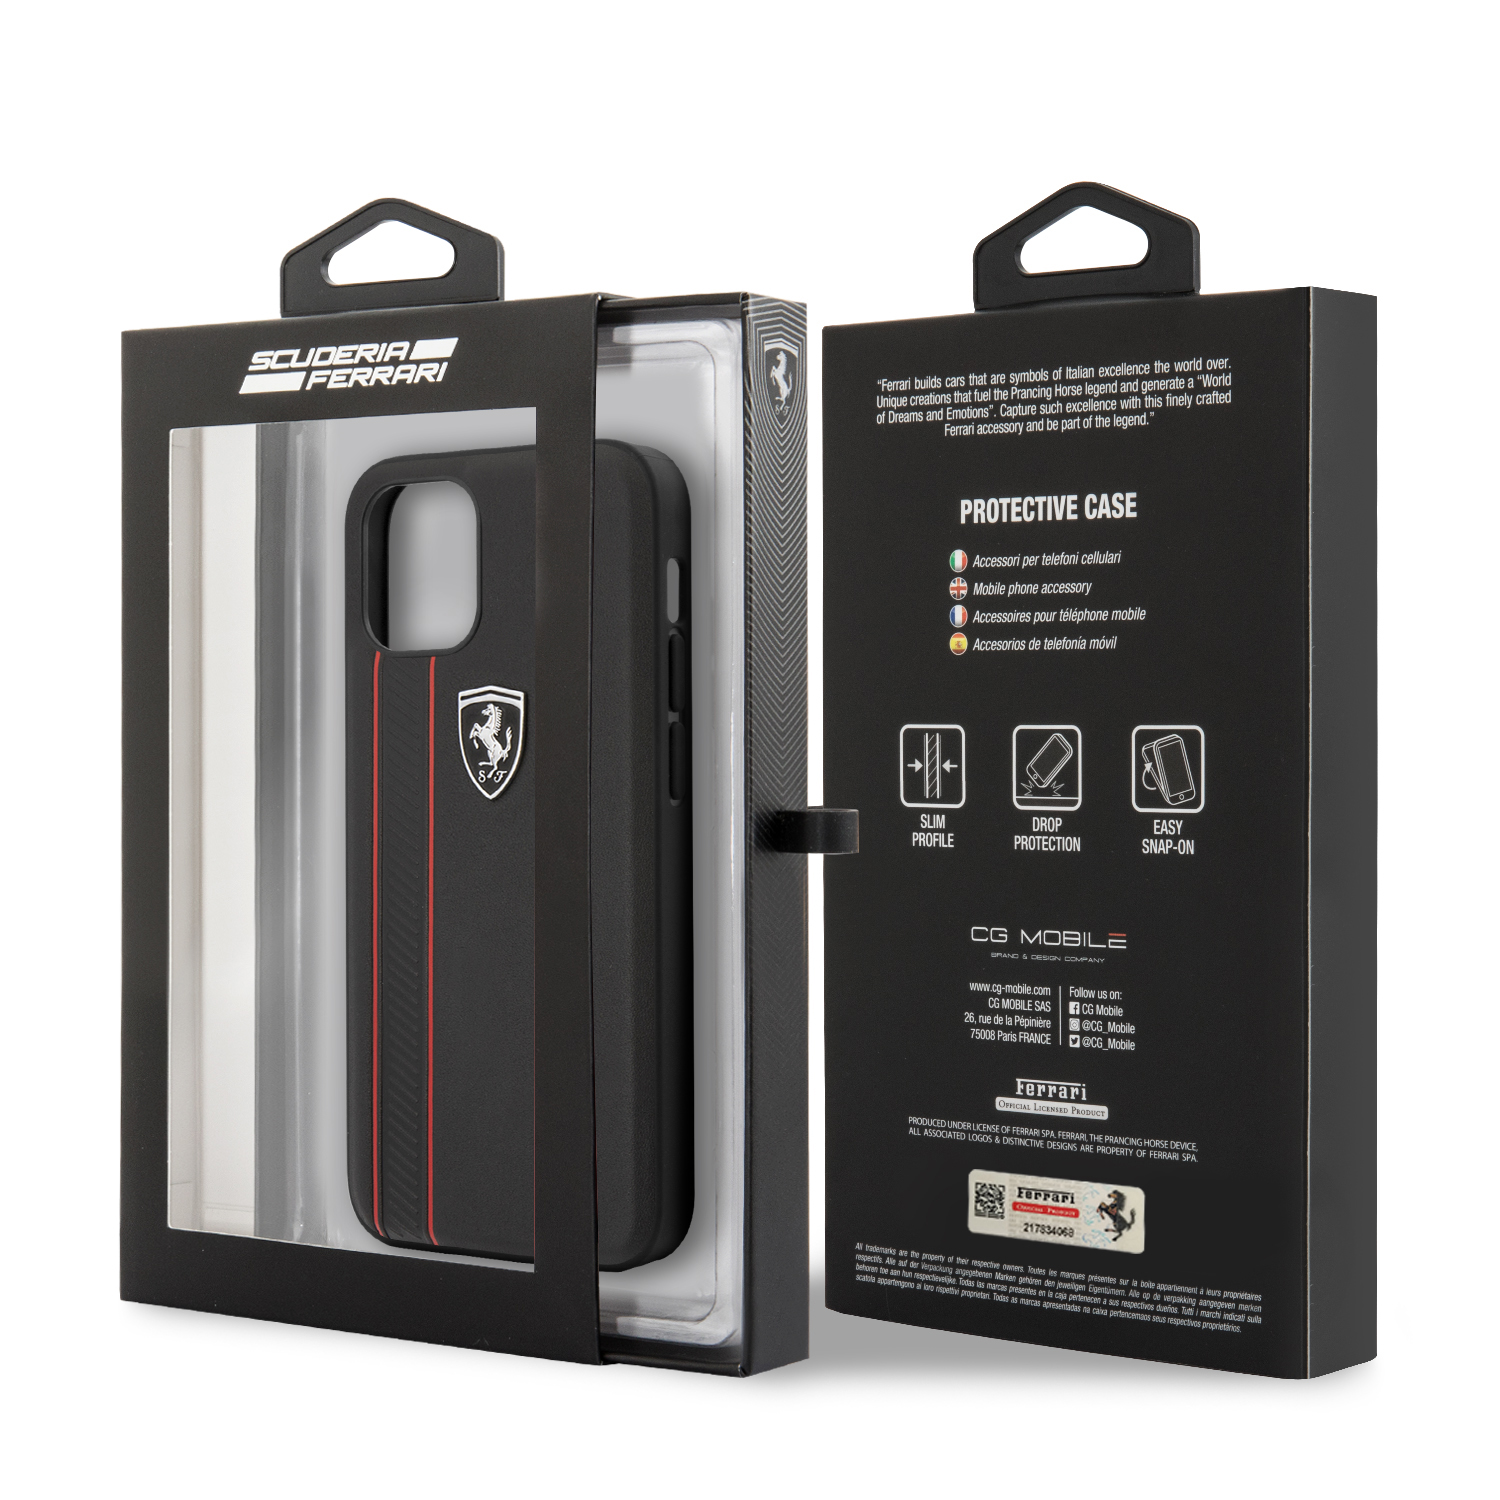 Funda Protector Carcasa Ferrari Costura Piel iPhone 12 Mini-Negro